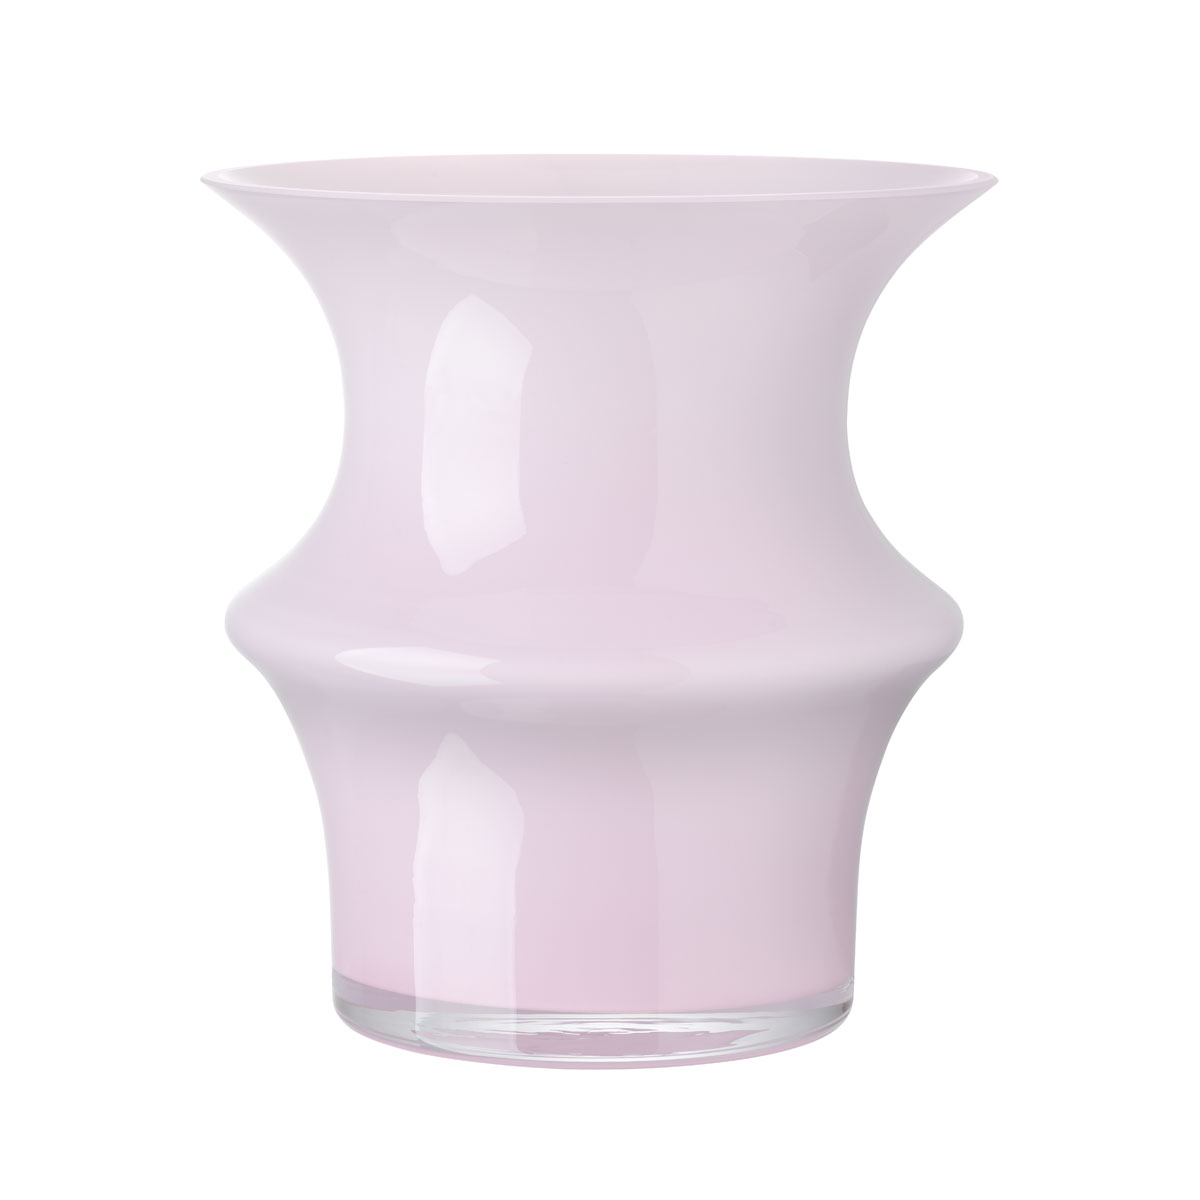 Kosta Boda Pagod Small Vase, Pink